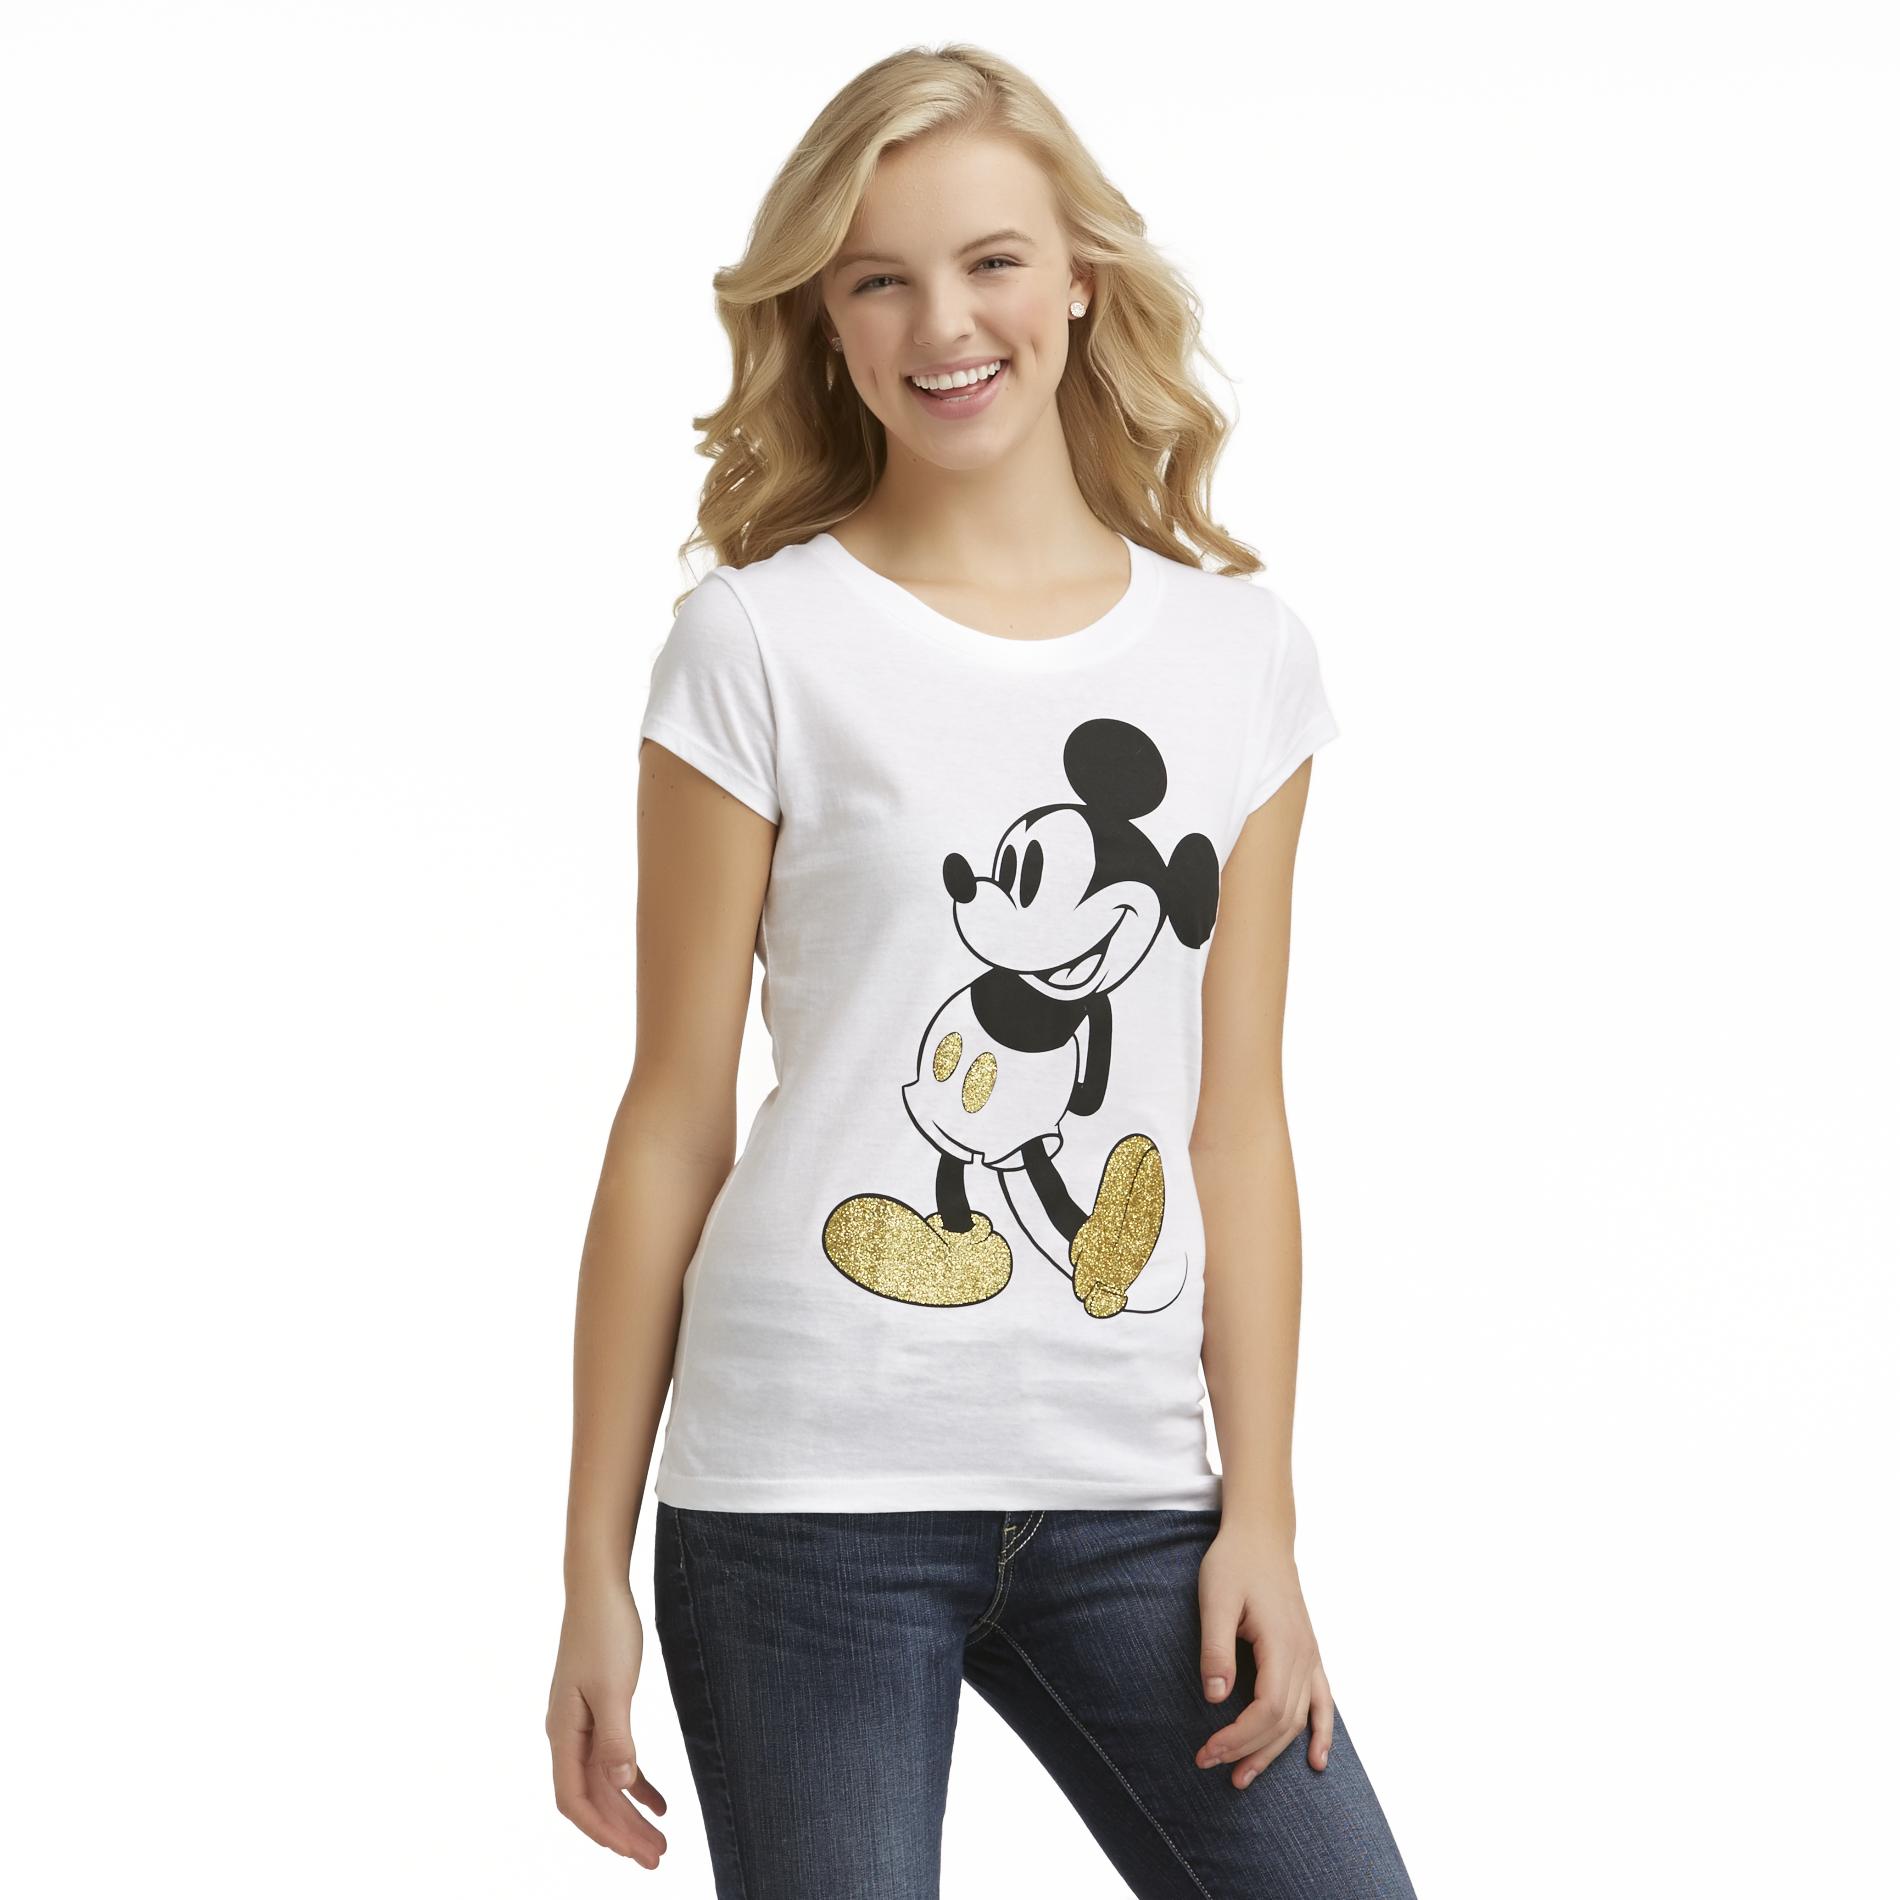 Disney Junior's Mickey Mouse T-Shirt